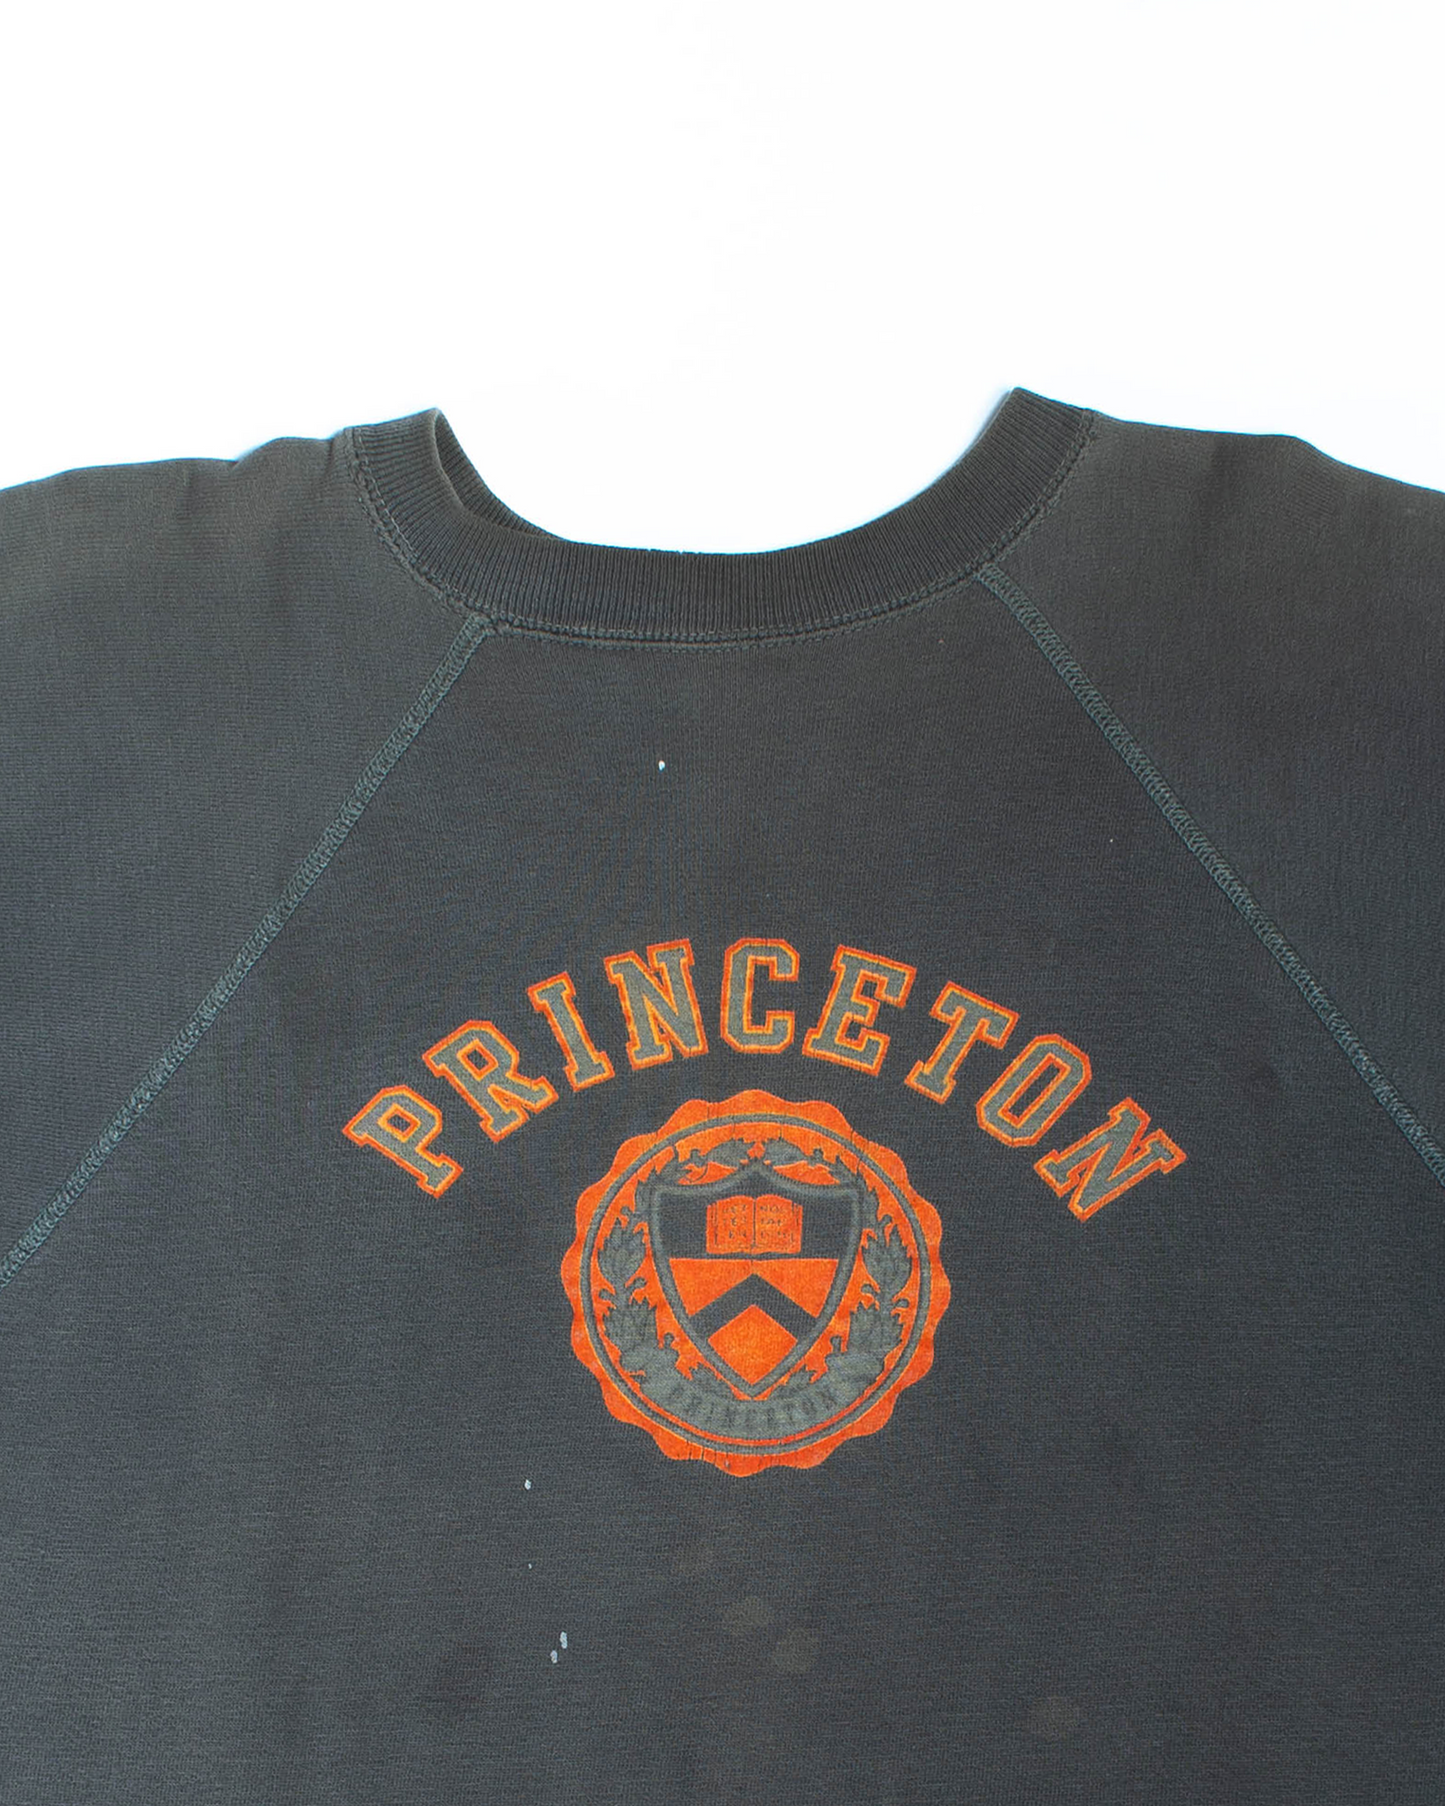 Princeton "Cut Off" Sweatshirt